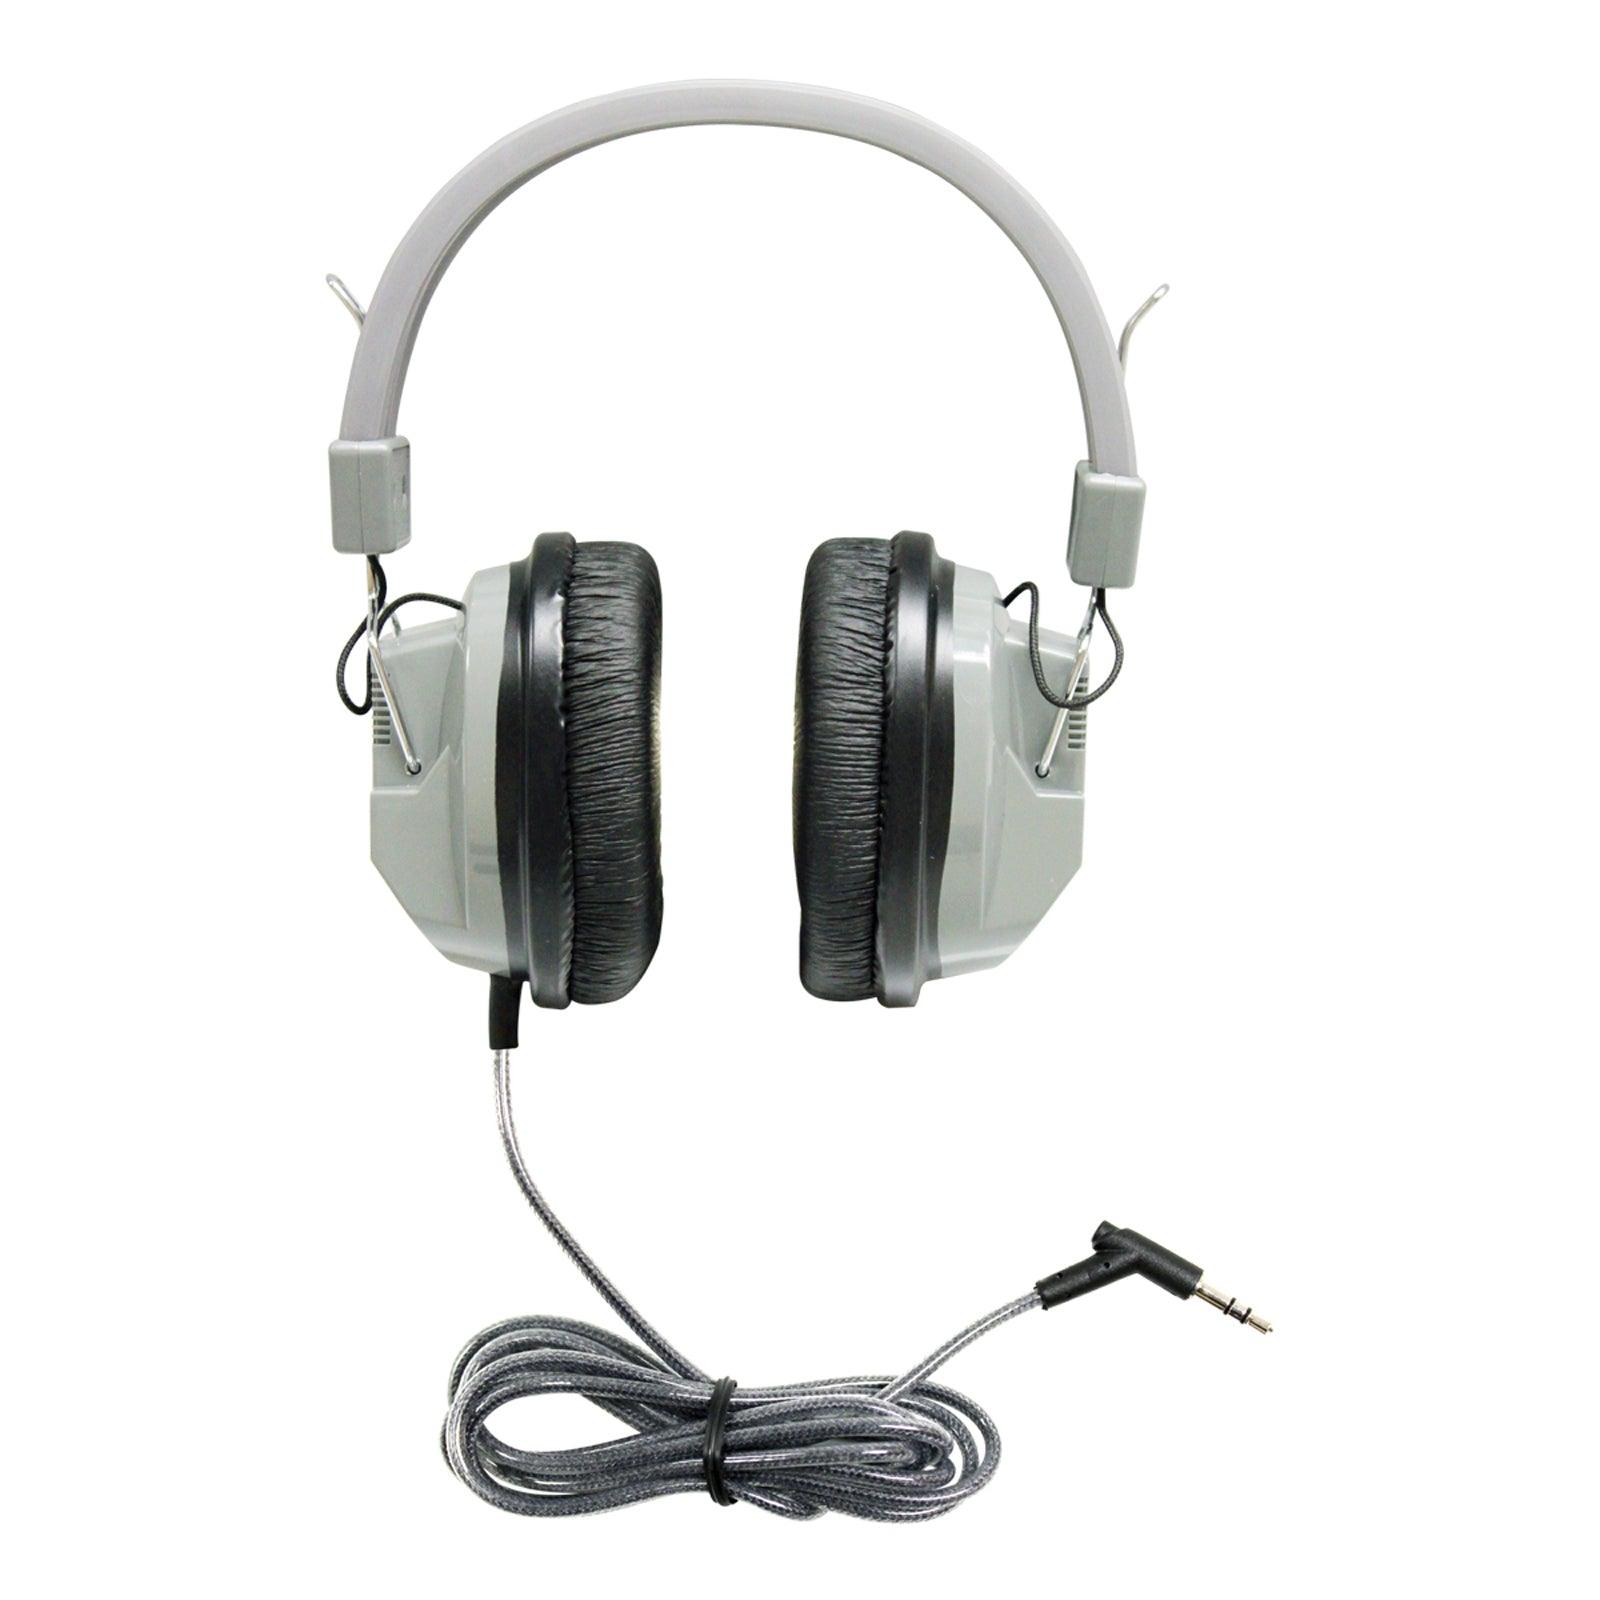 SchoolMate Deluxe Stereo Headphone with 3.5mm Plug - Loomini